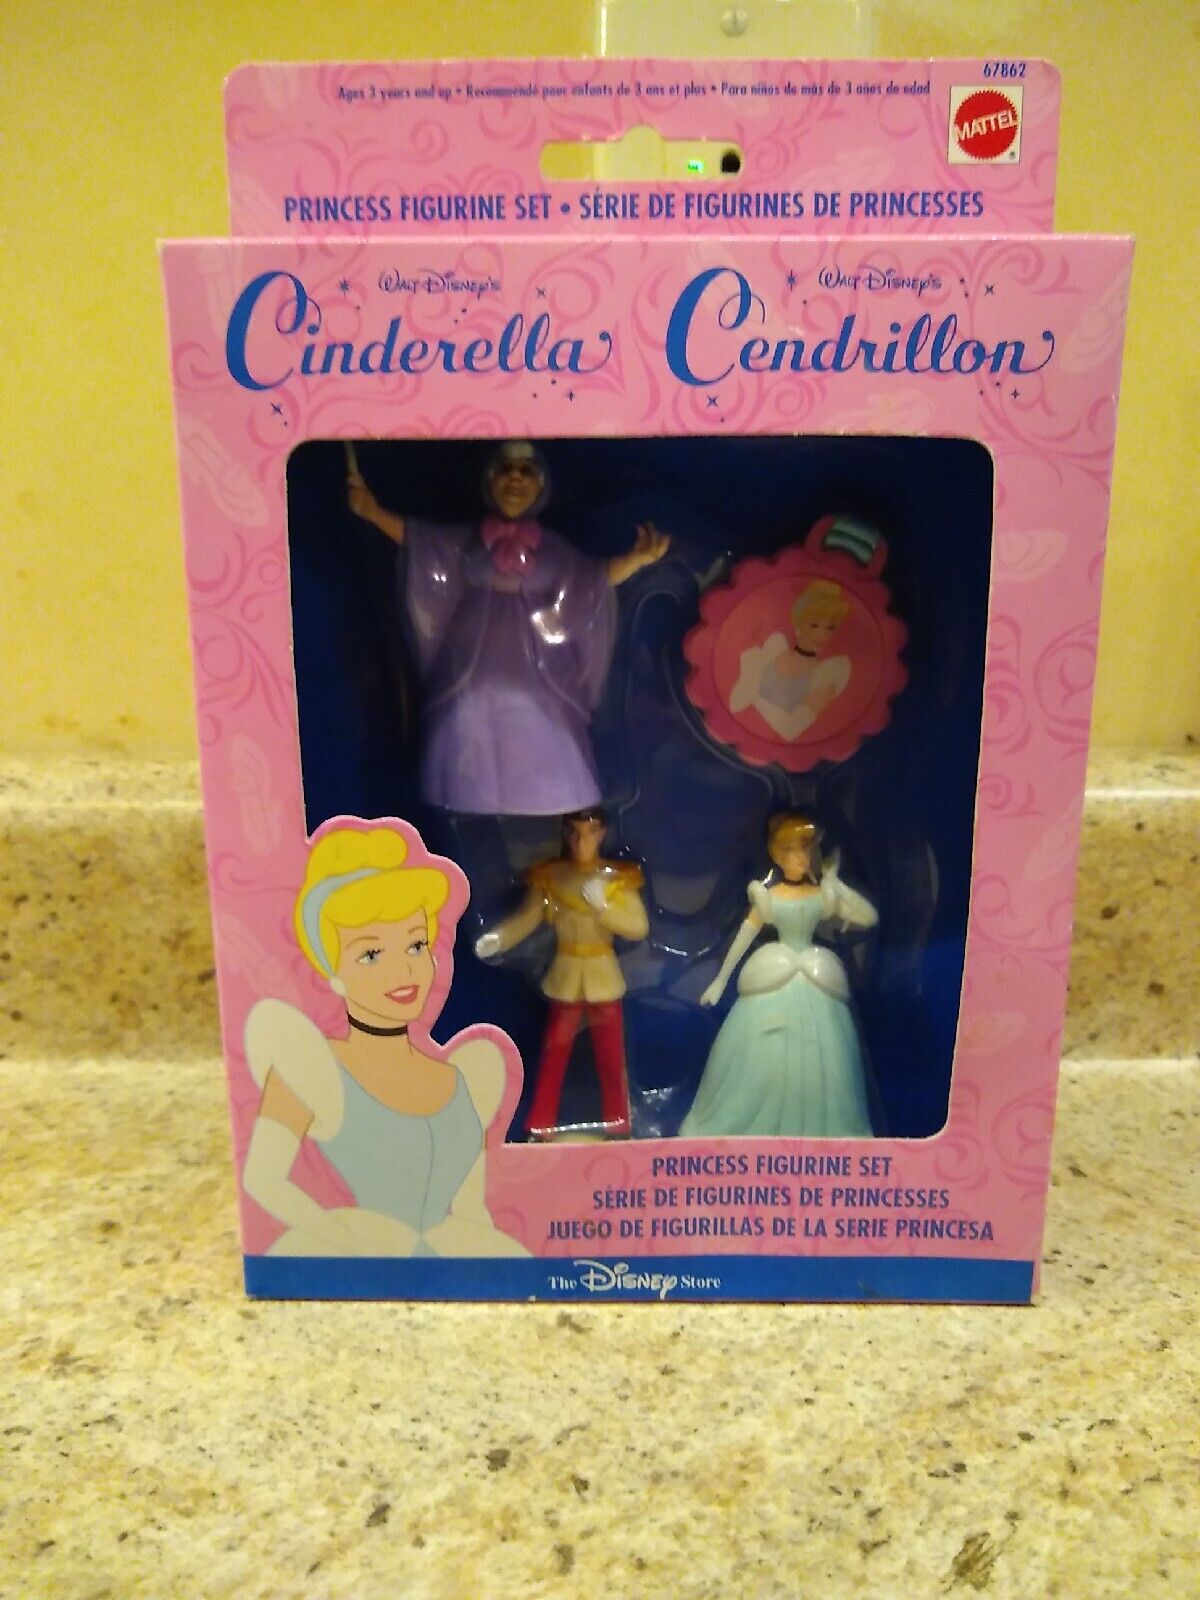 RARE 1998 Mattel Disney Store Cinderella Princess Figurine Set 67862 NIP